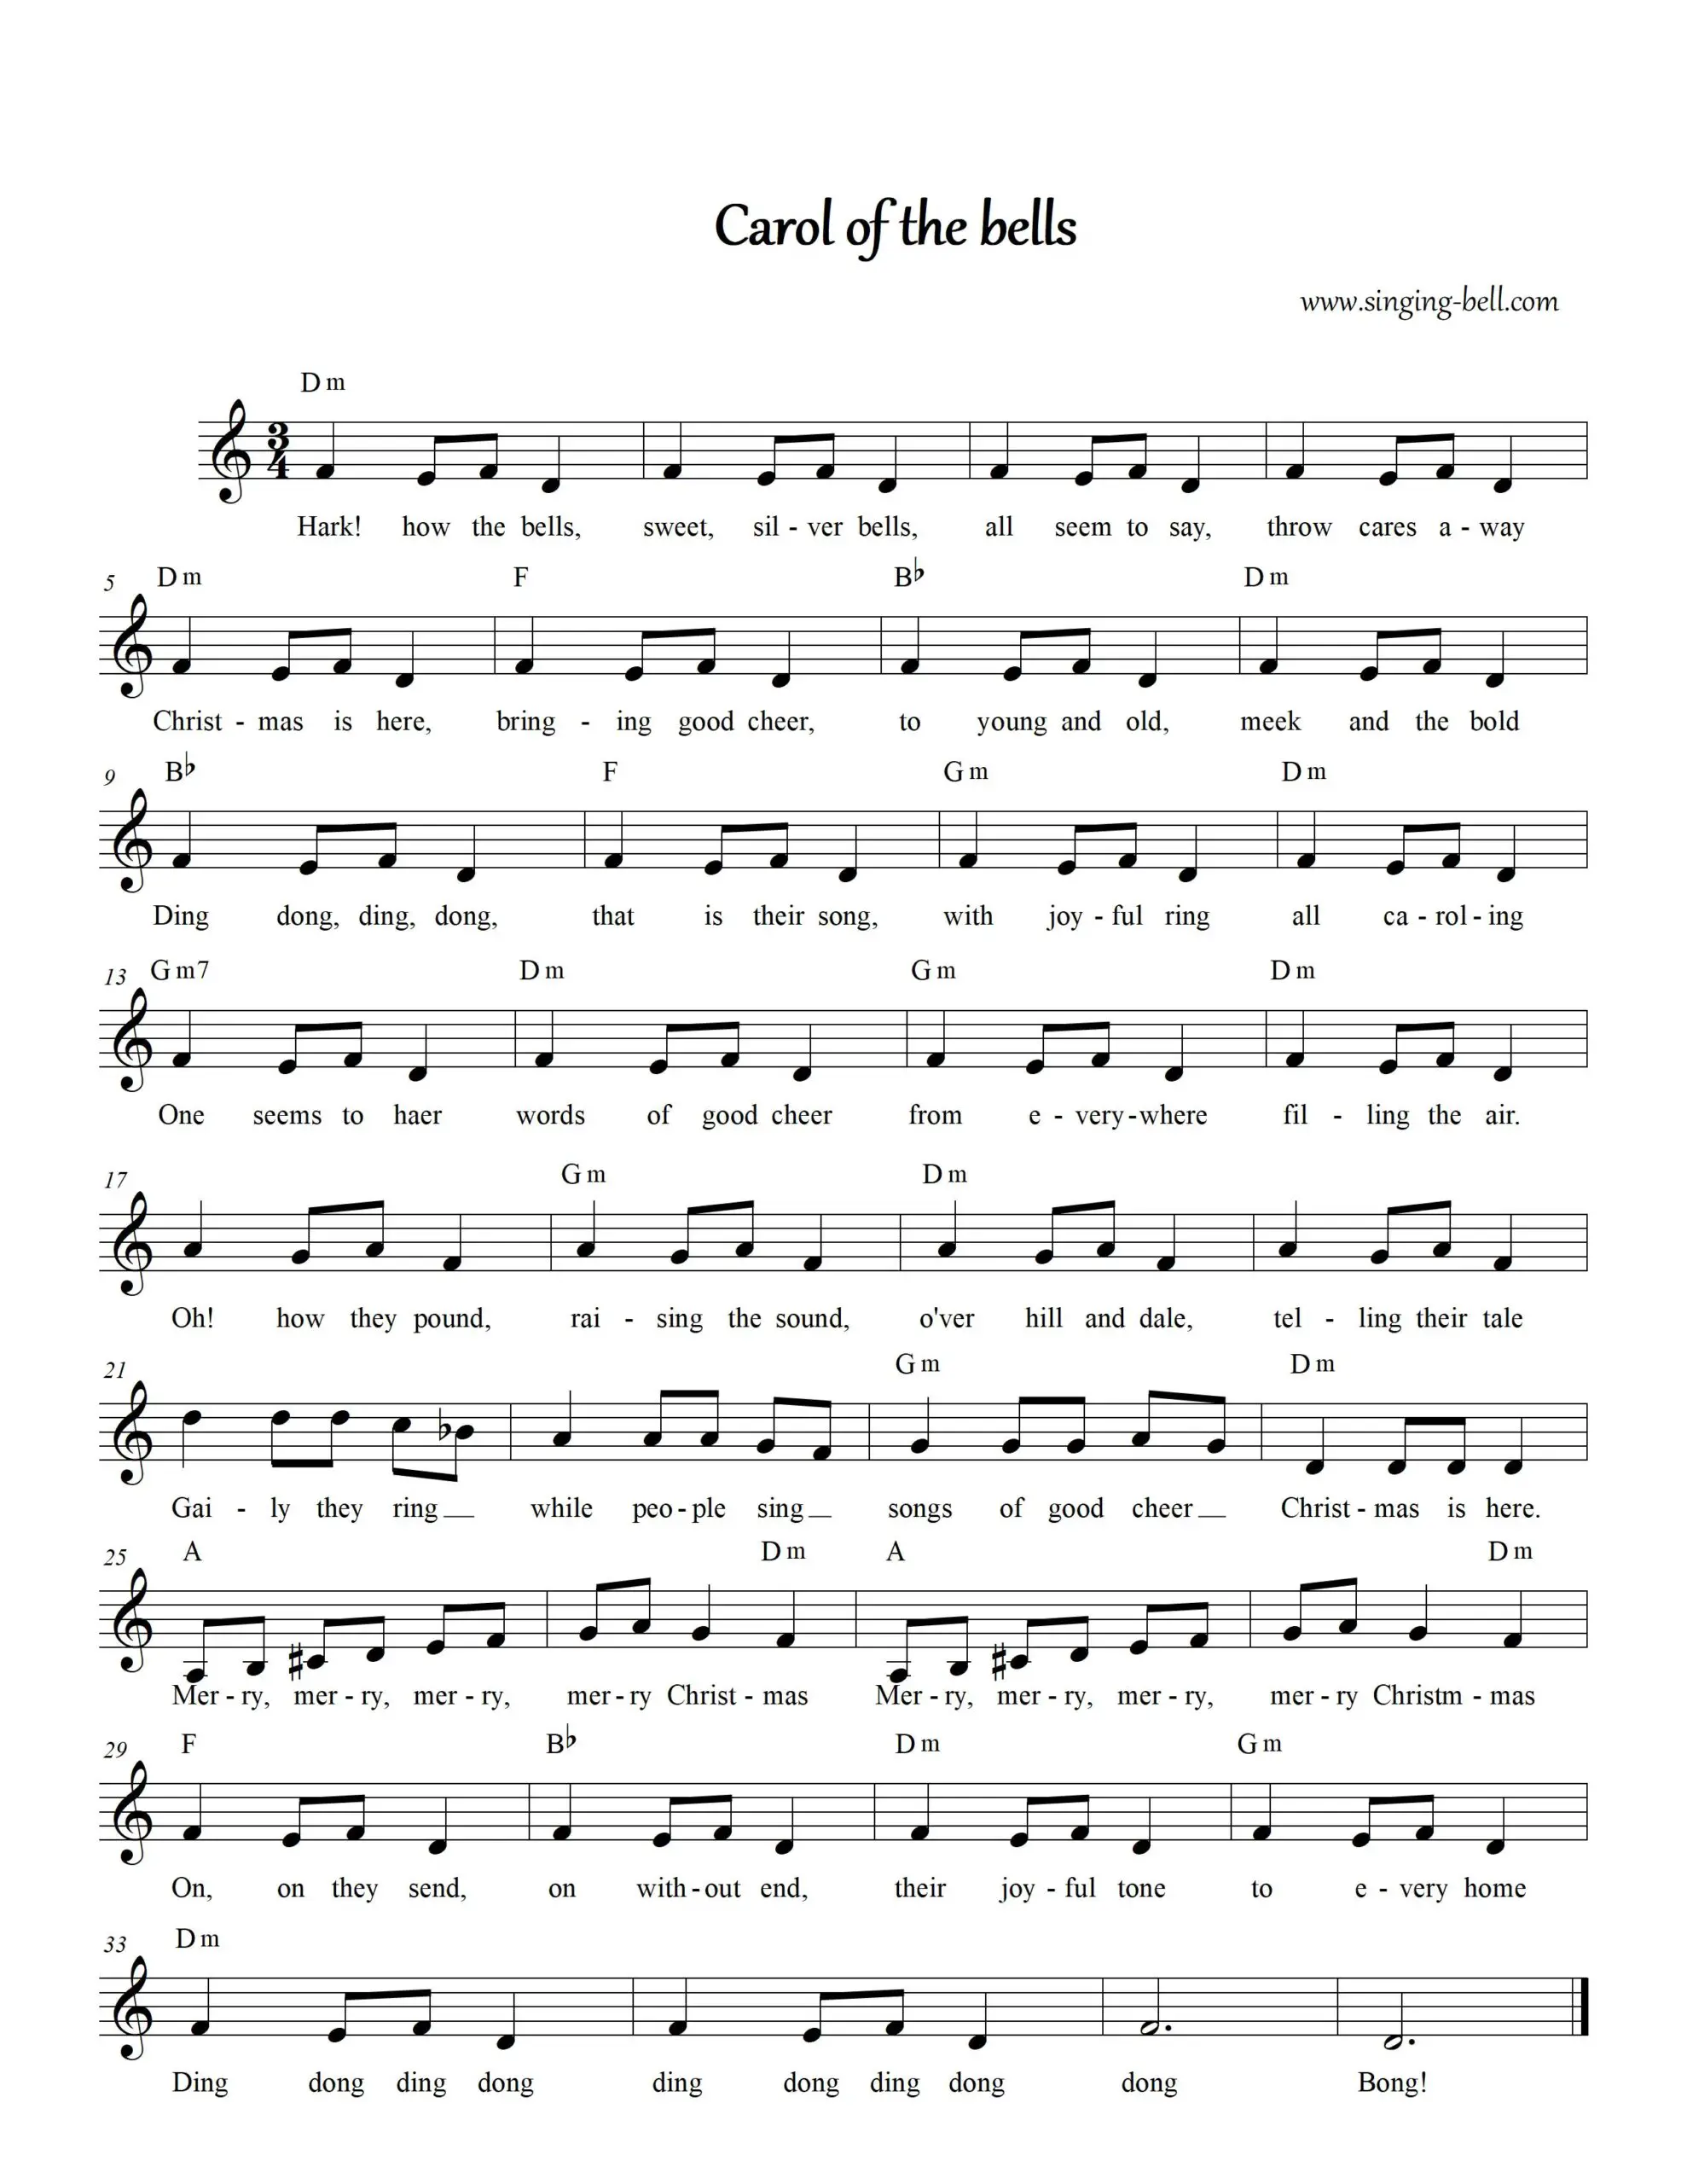 Carol of the Bells - Simple Sheet Music